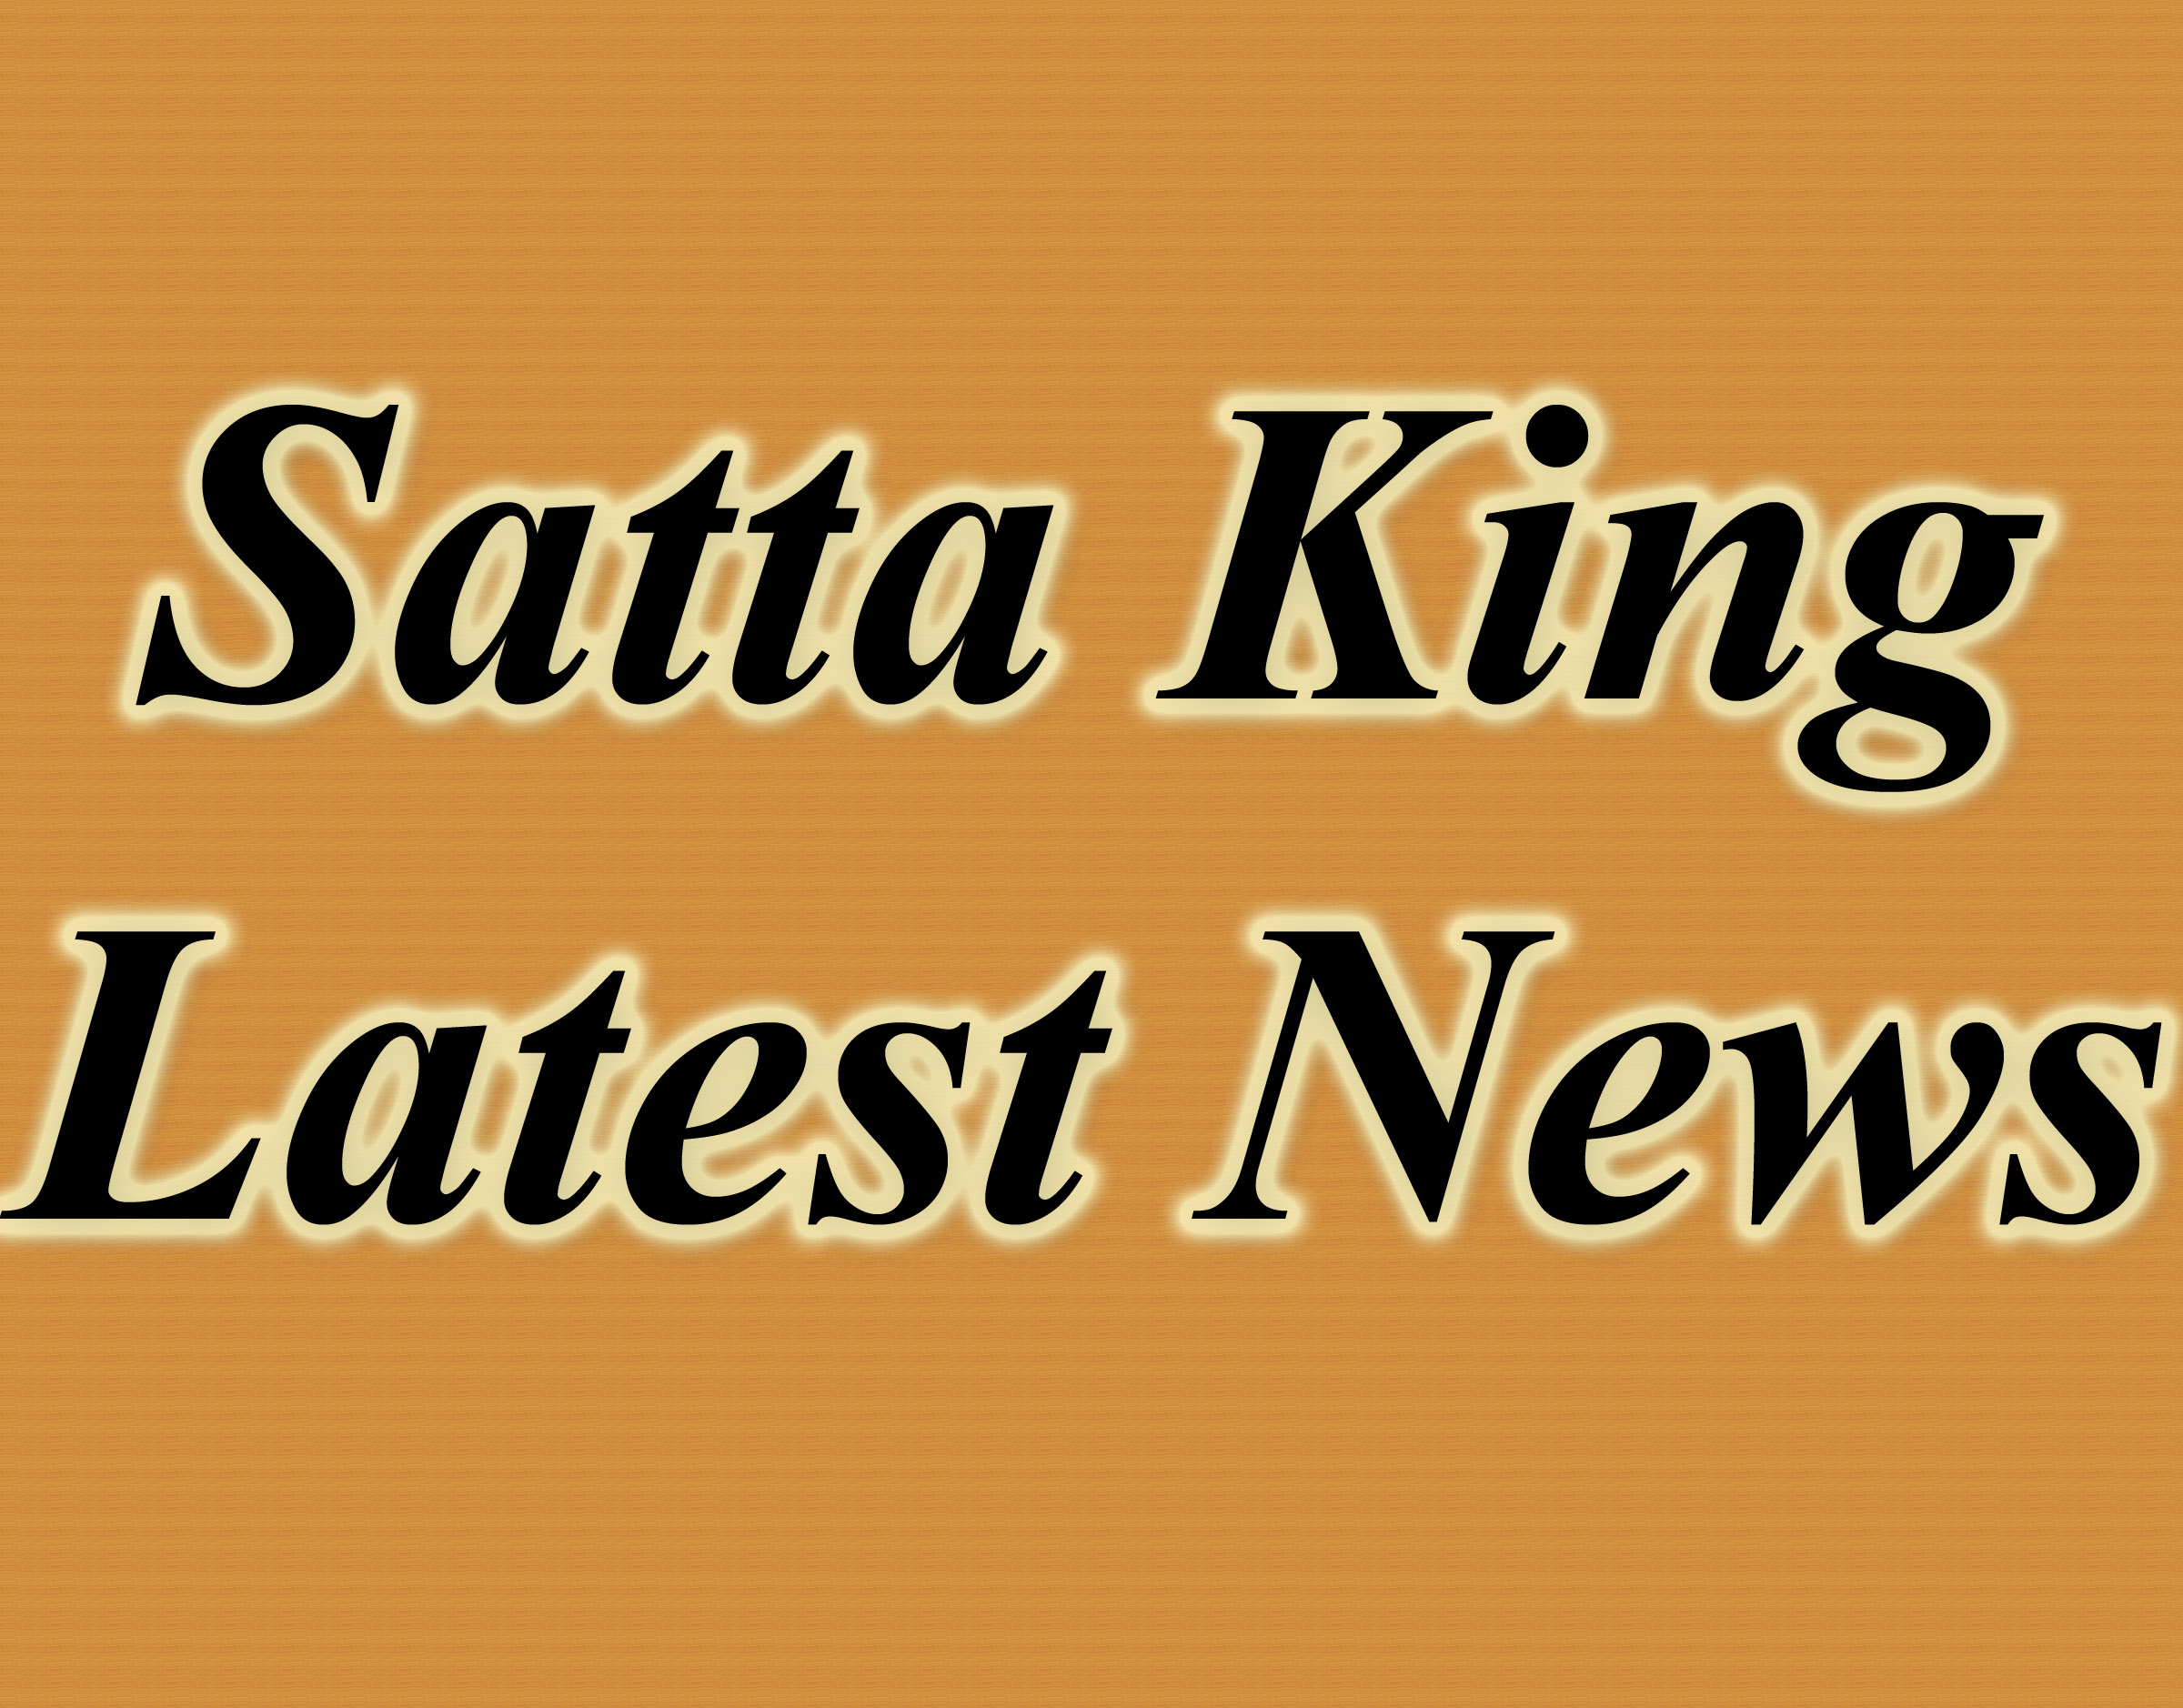 Satta King News